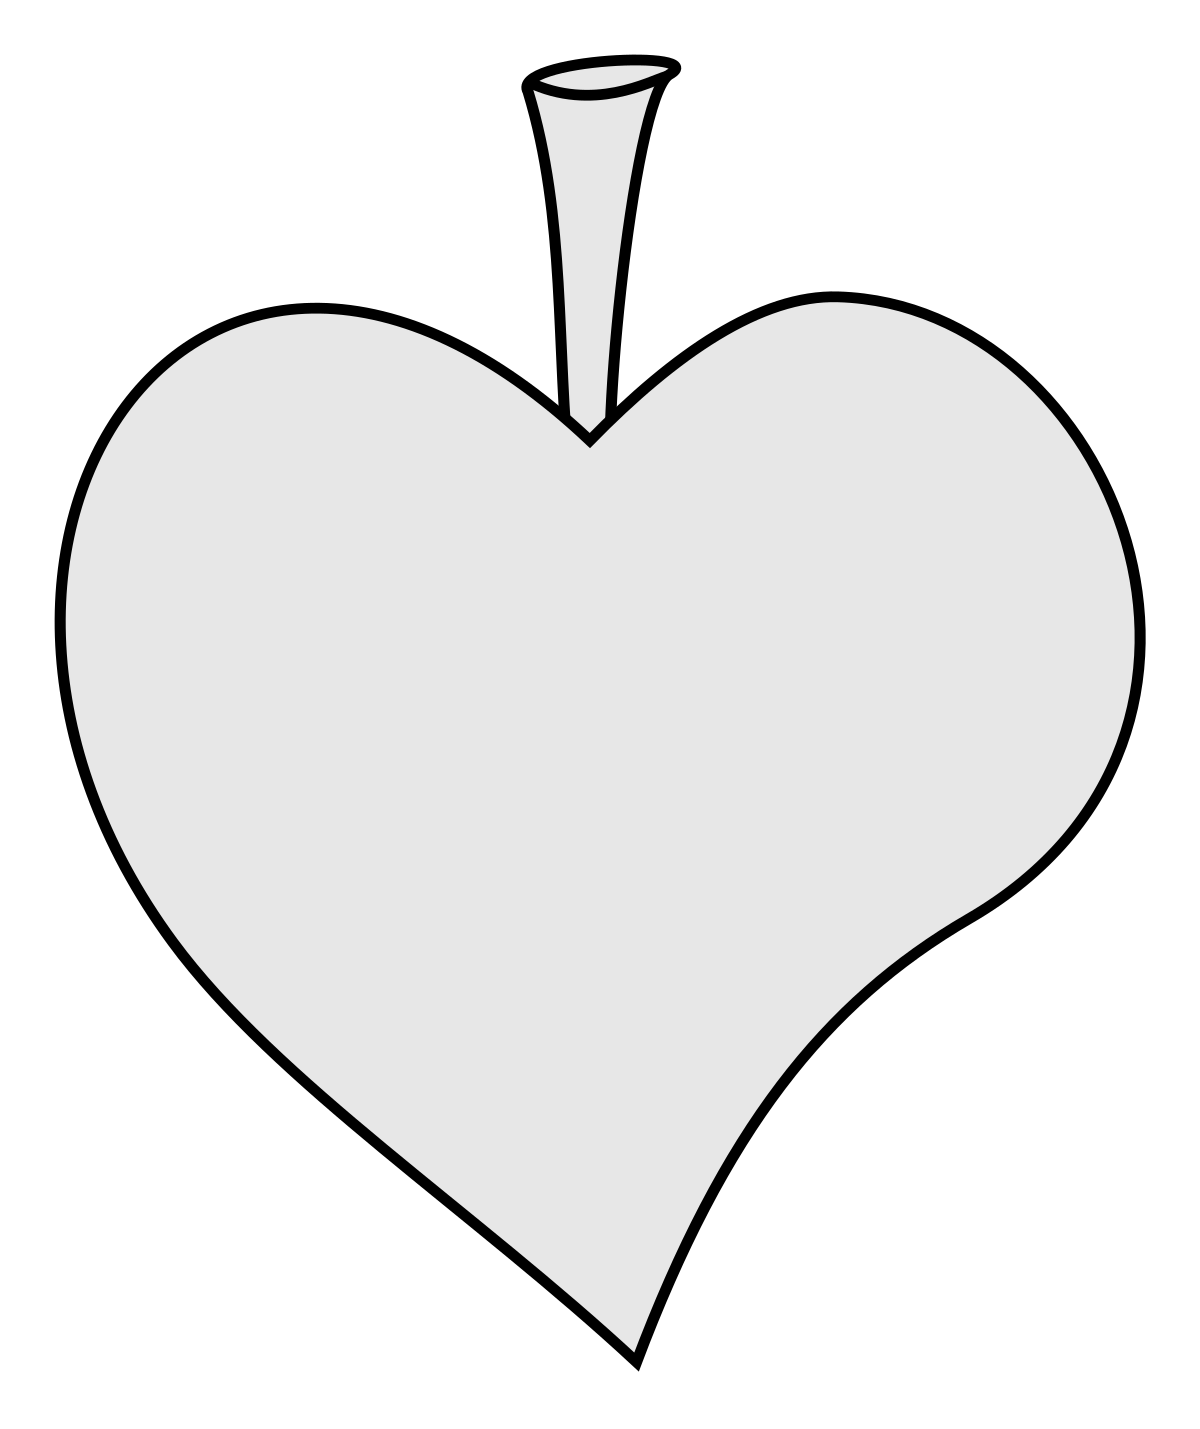 File:Miele logo.svg - Wikimedia Commons